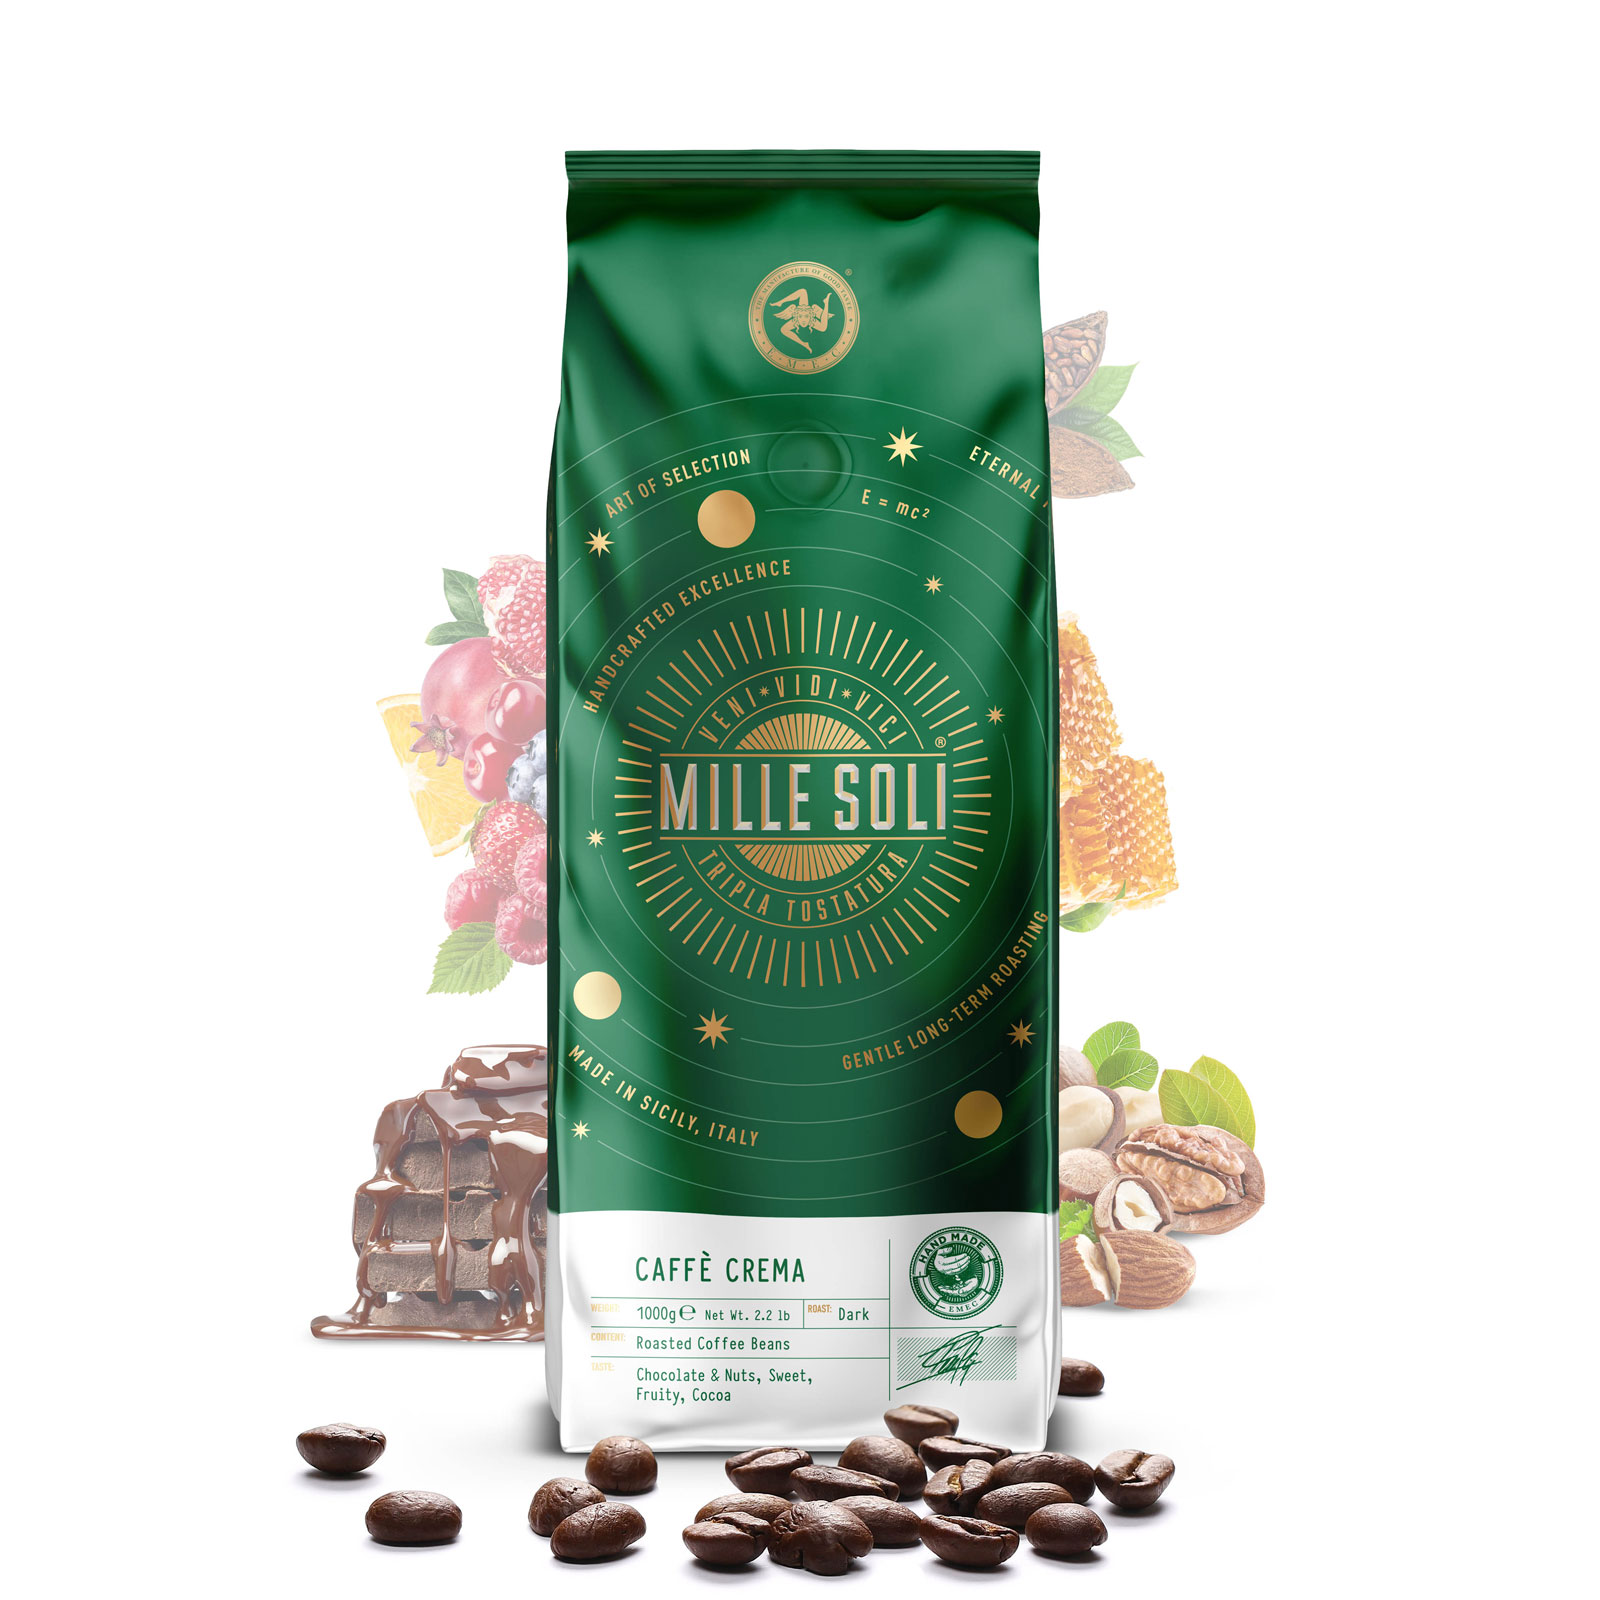 MILLE SOLI - Caffè Crema - 1000g - Beans